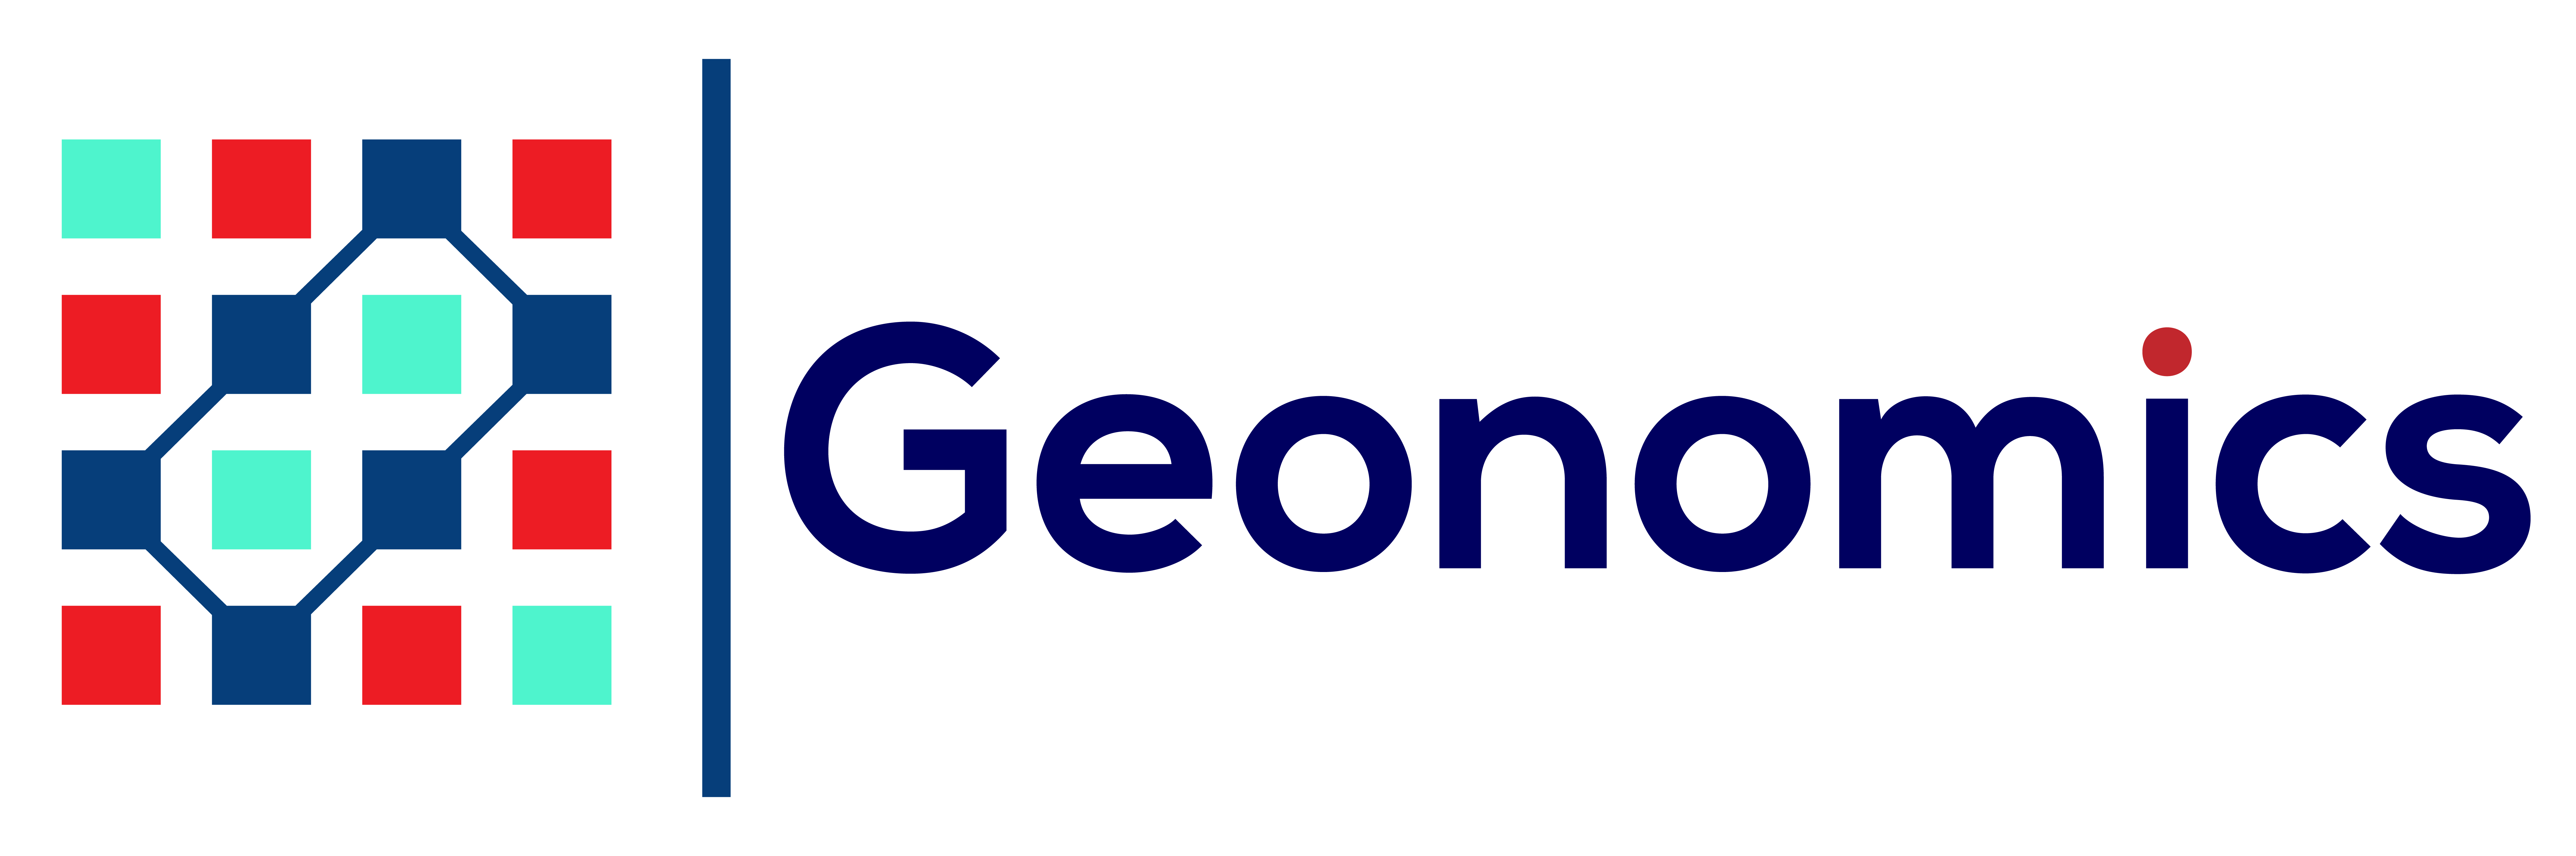 Geonomics Logo 5